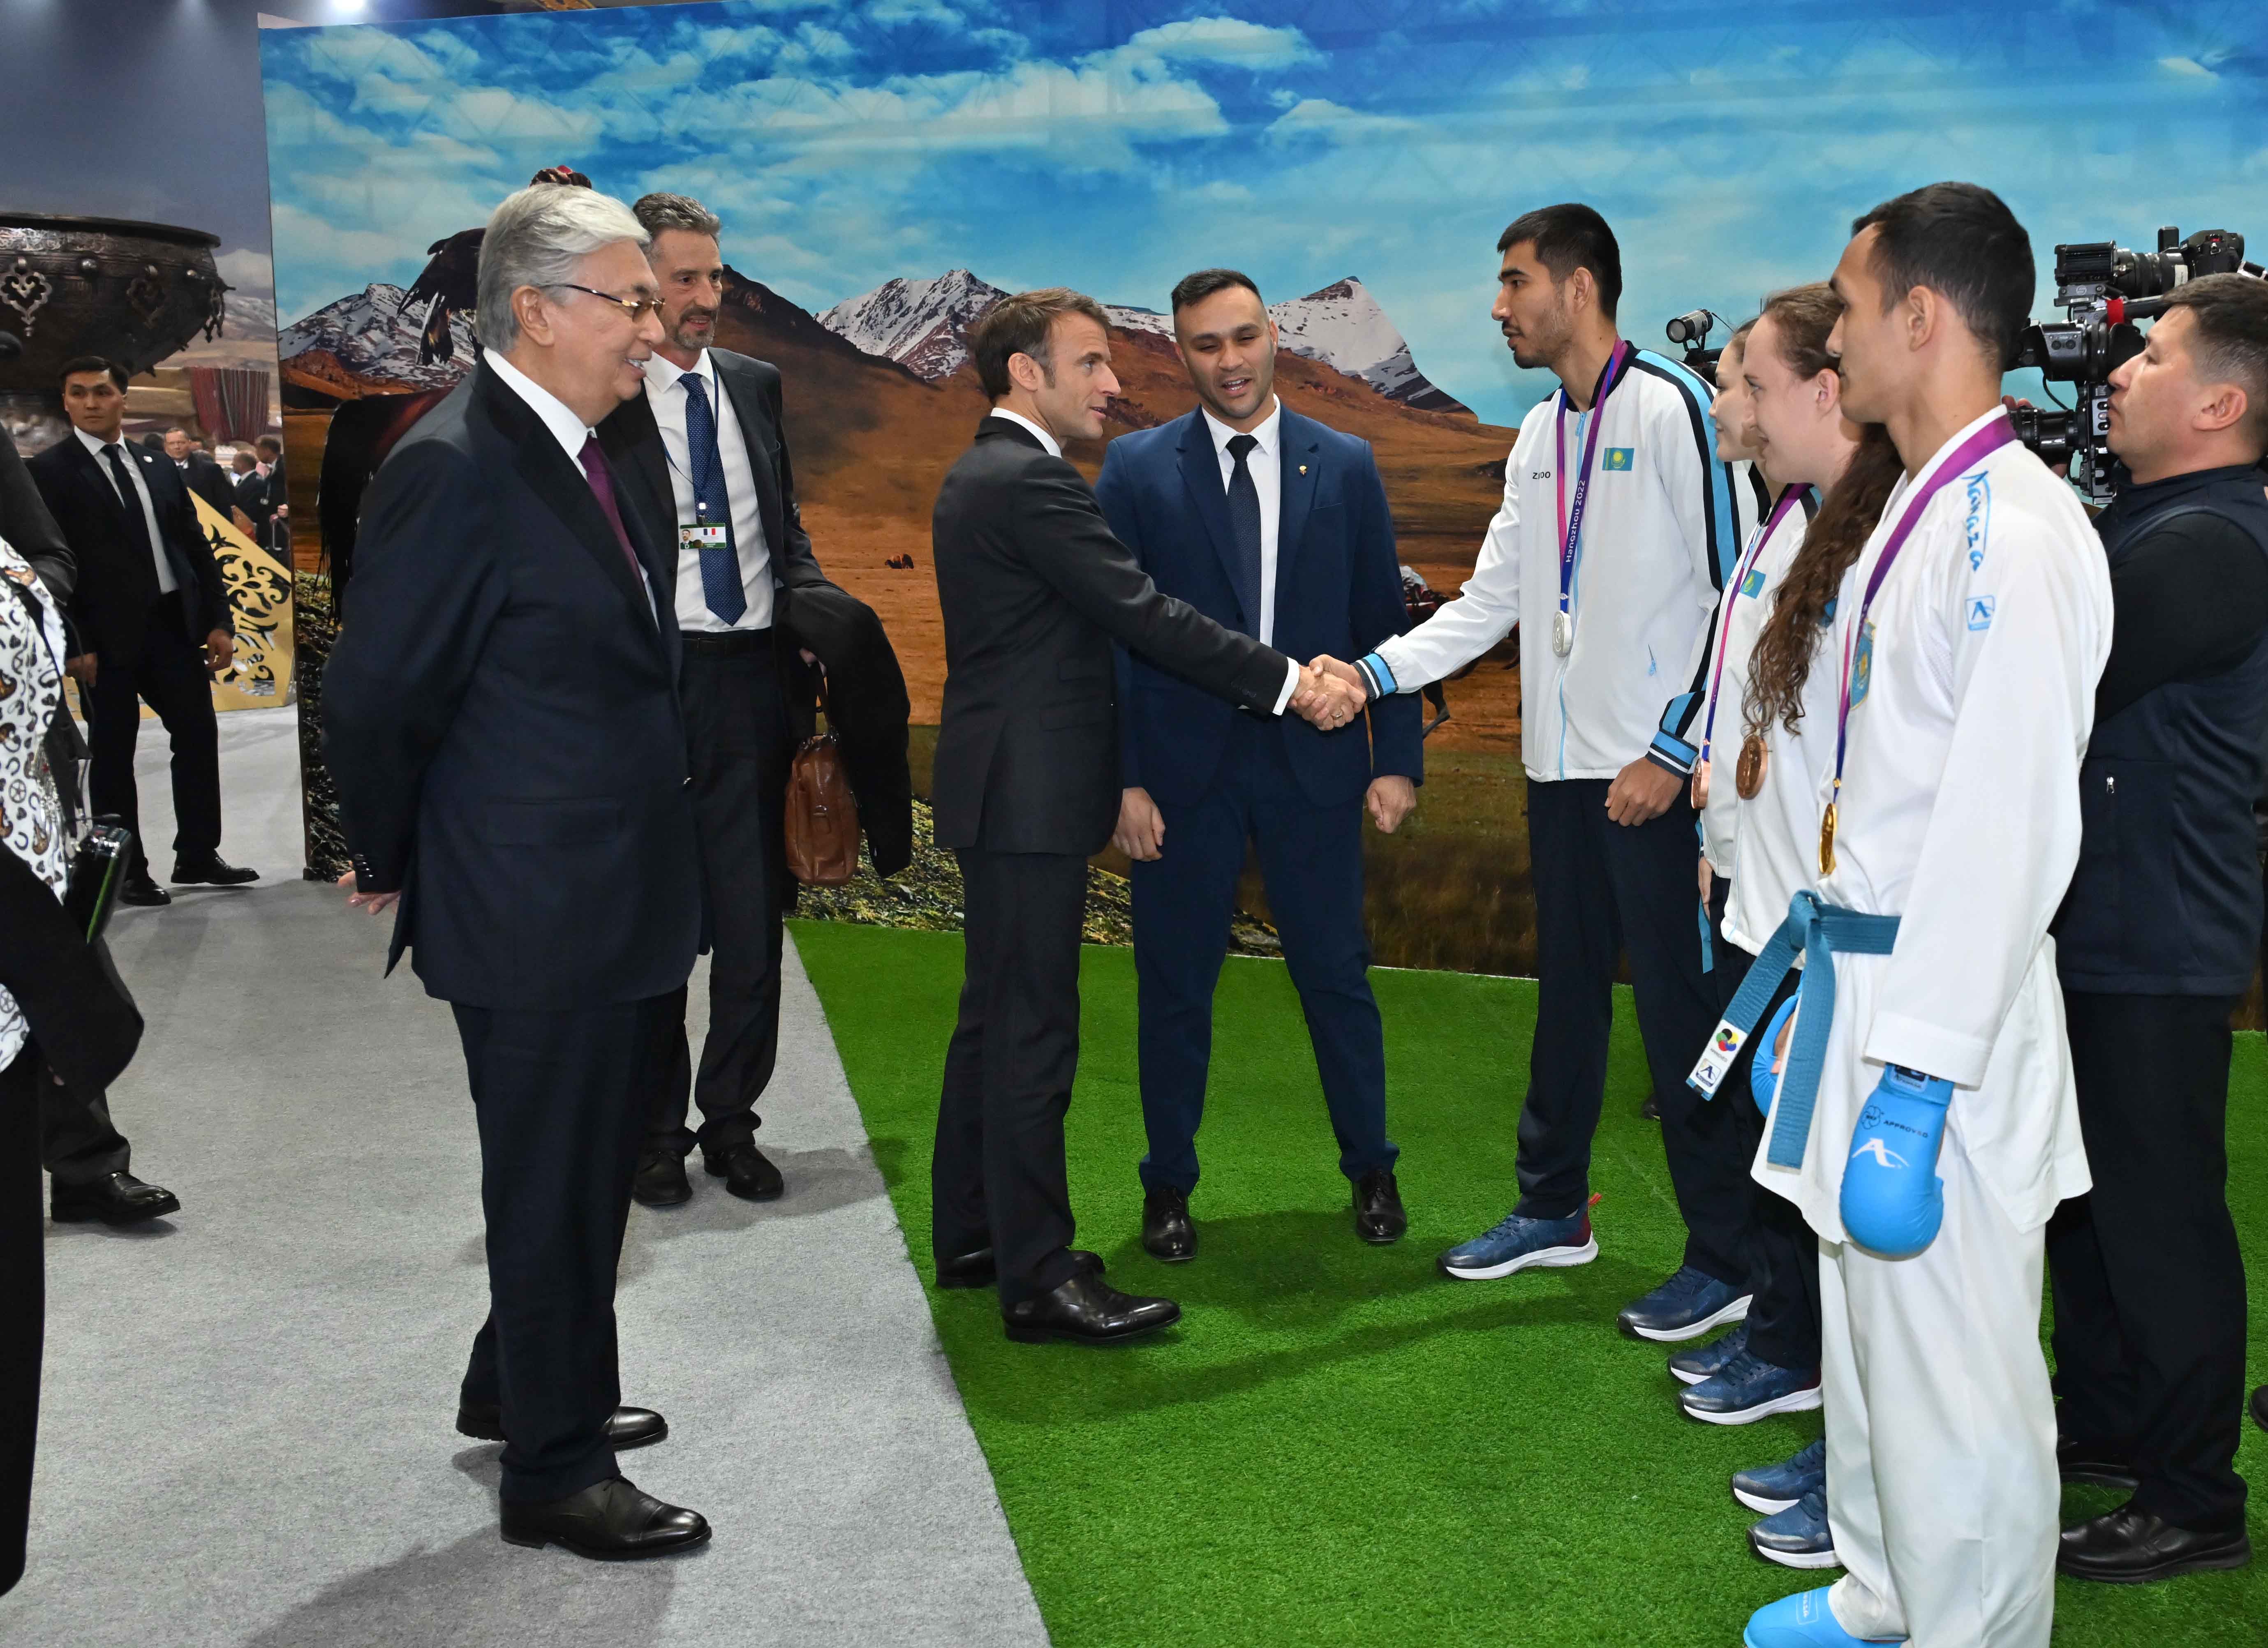 Presidents Kassym-Jomart Tokayev and Emmanuel Macron explore Kazakh culture at "Ethnoaul" exhibition 